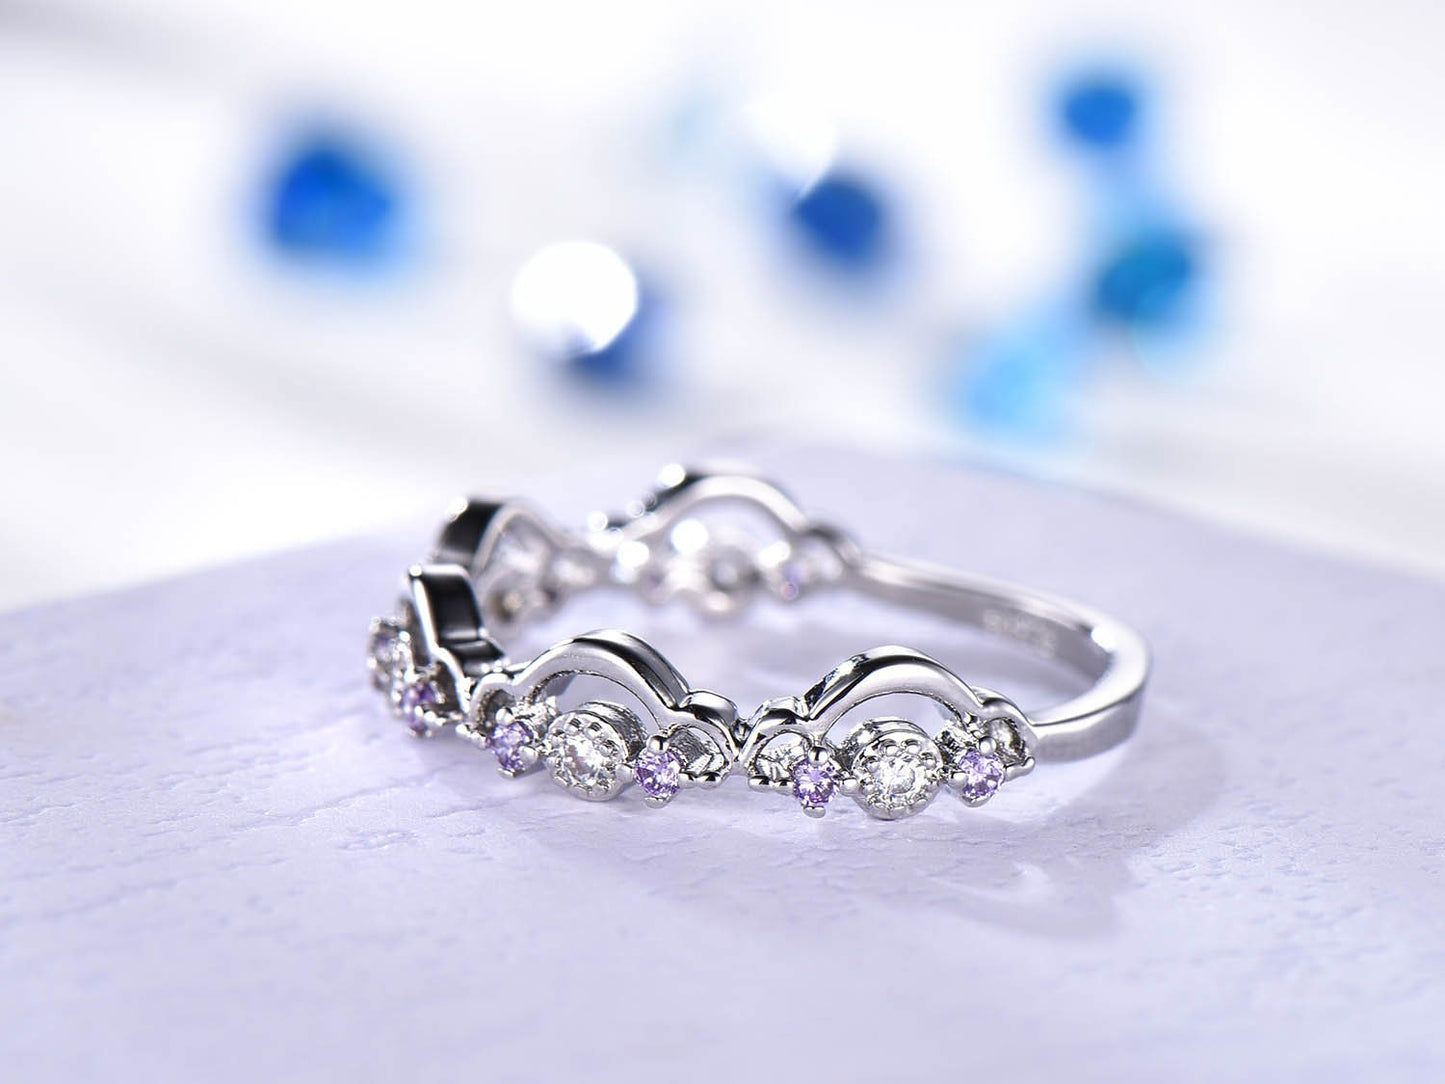 Amethyst diamond wedding band women half eternity ring 14k white gold natural gemstone floral loop promise bridal anniversary jewelry